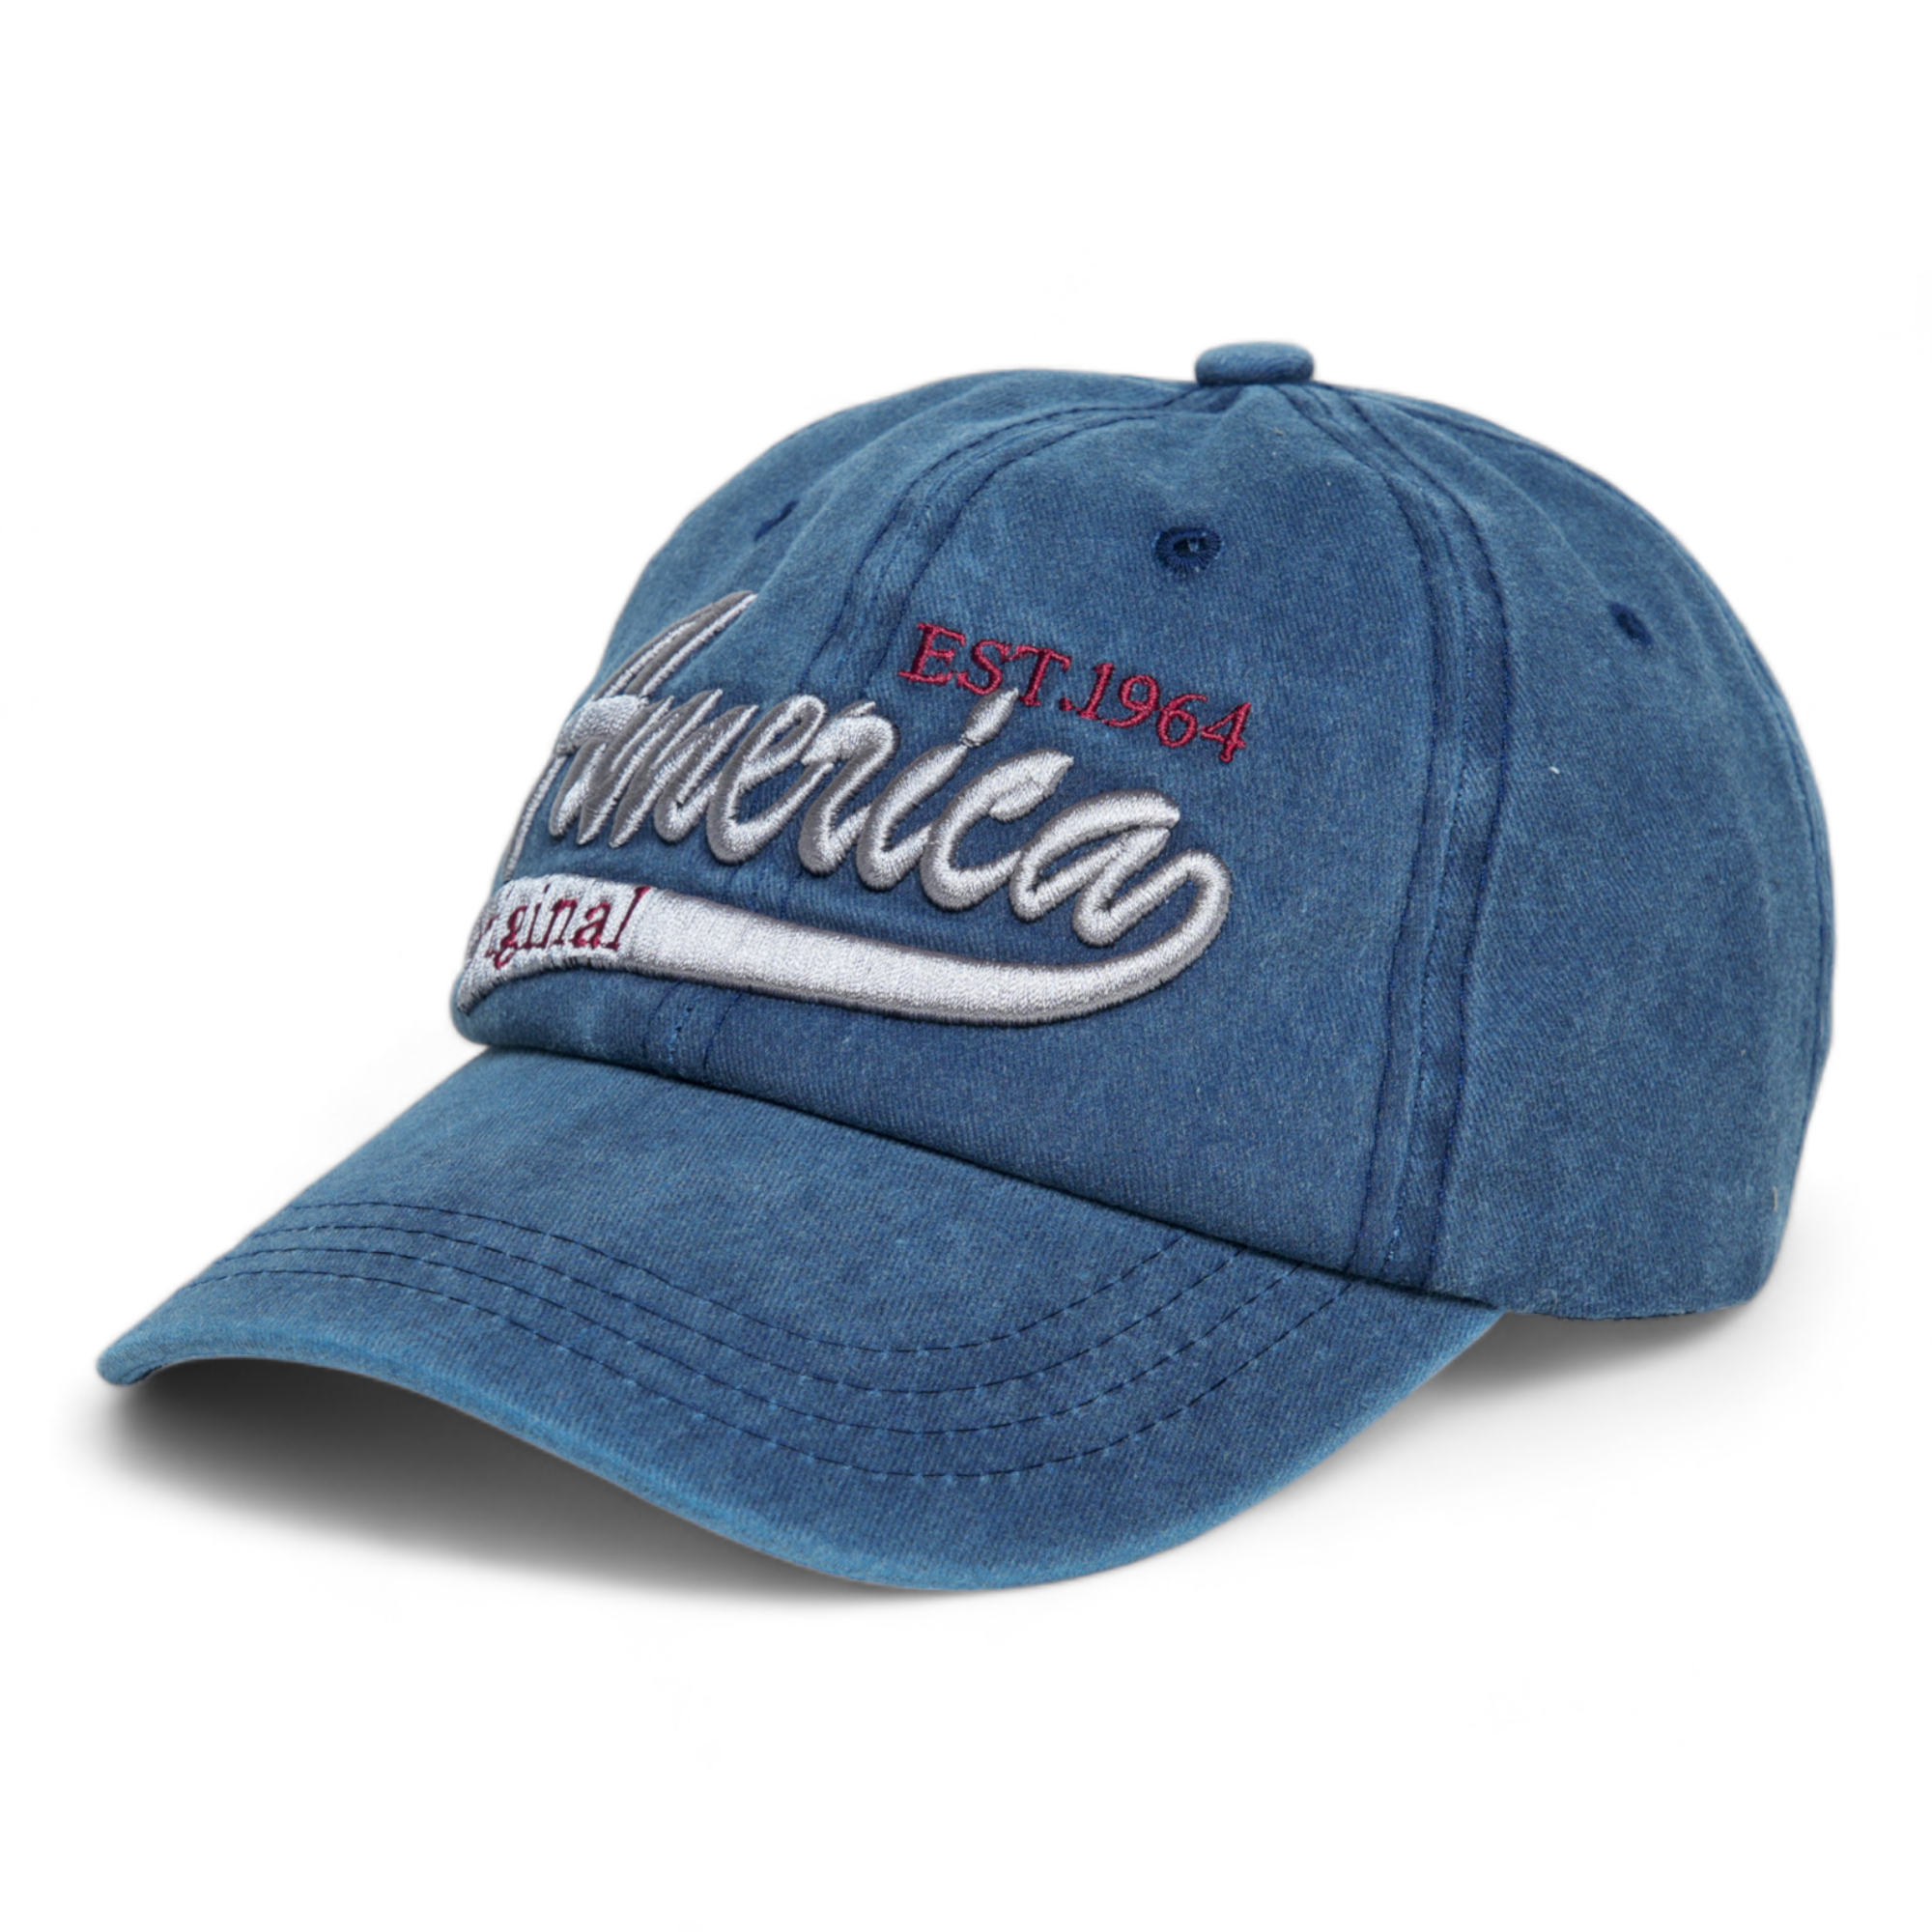 Chokore American Embroidered Baseball Cap (Blue)